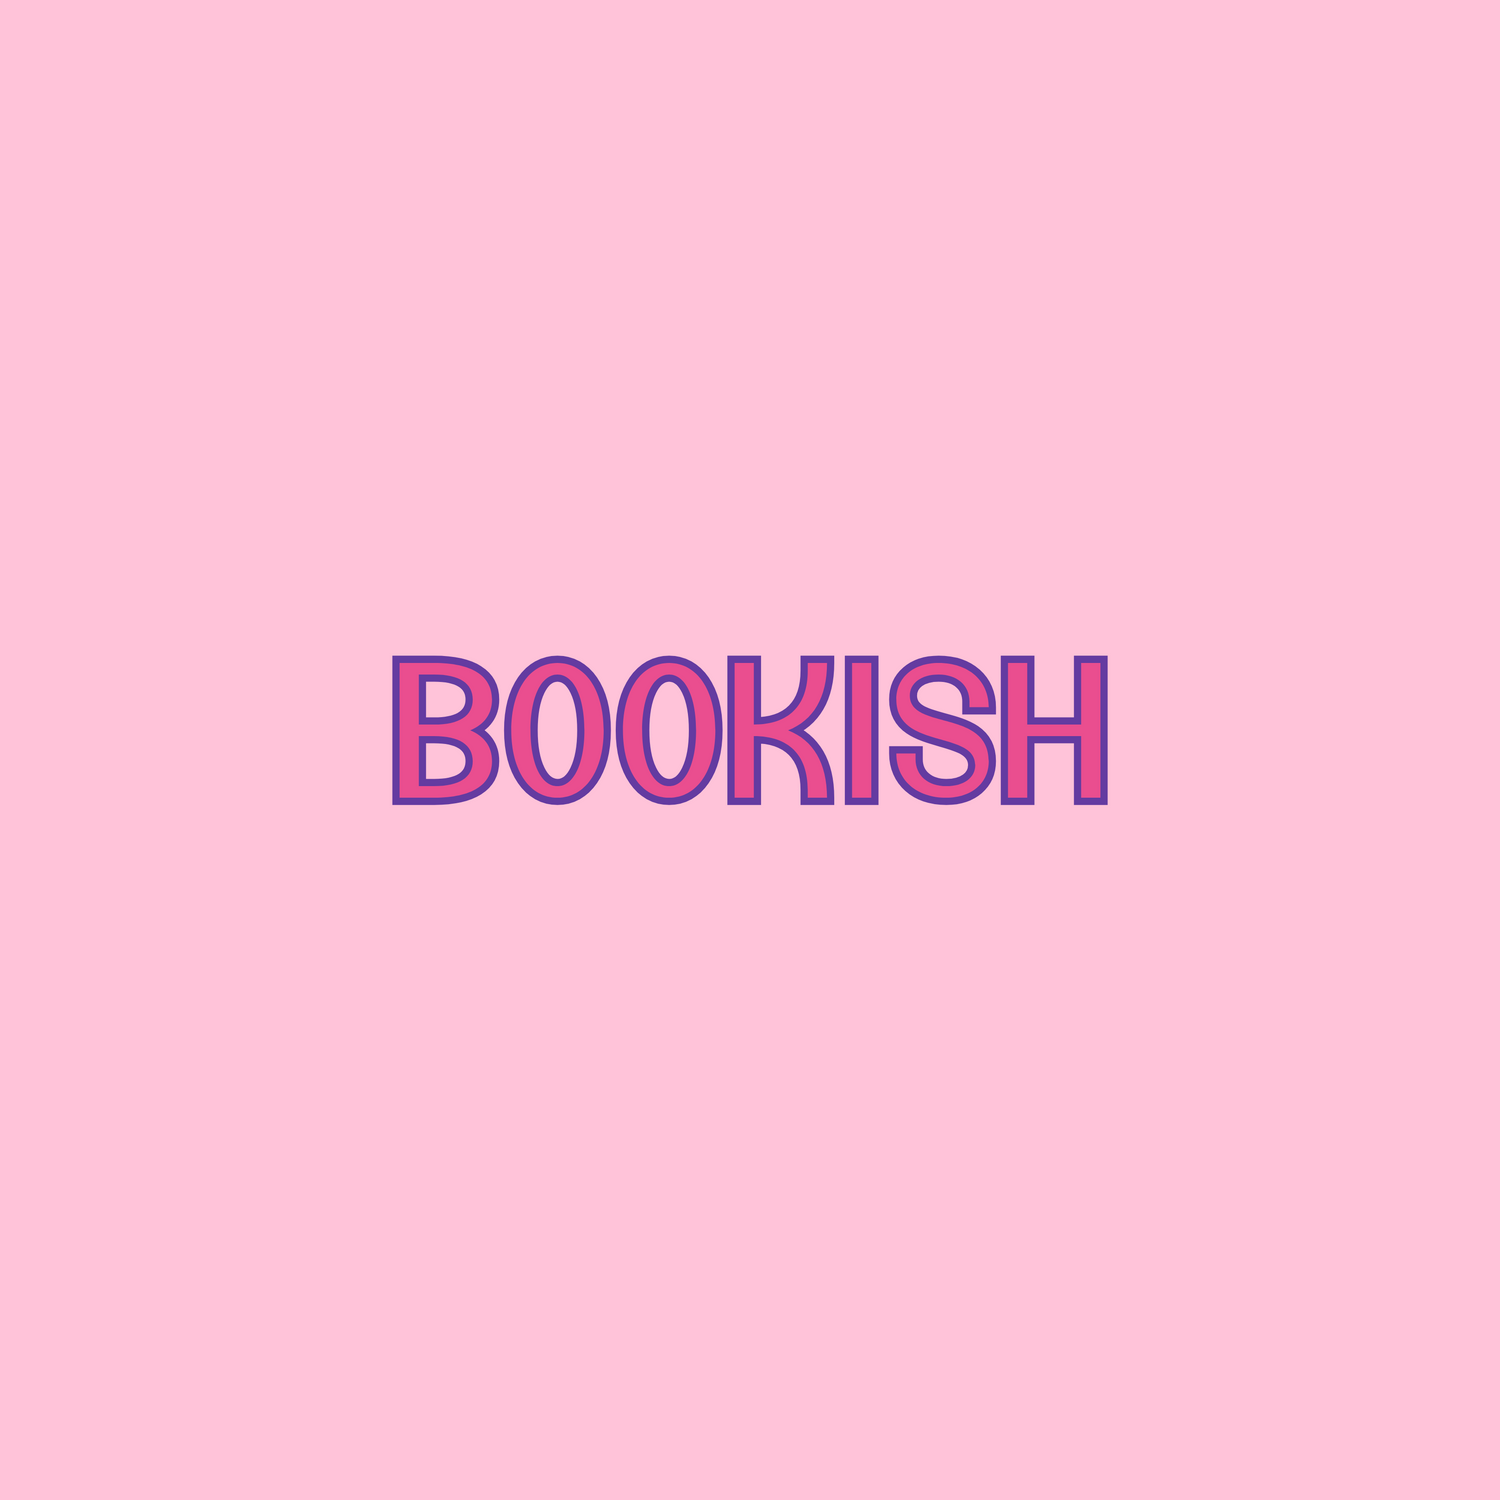 Bookish